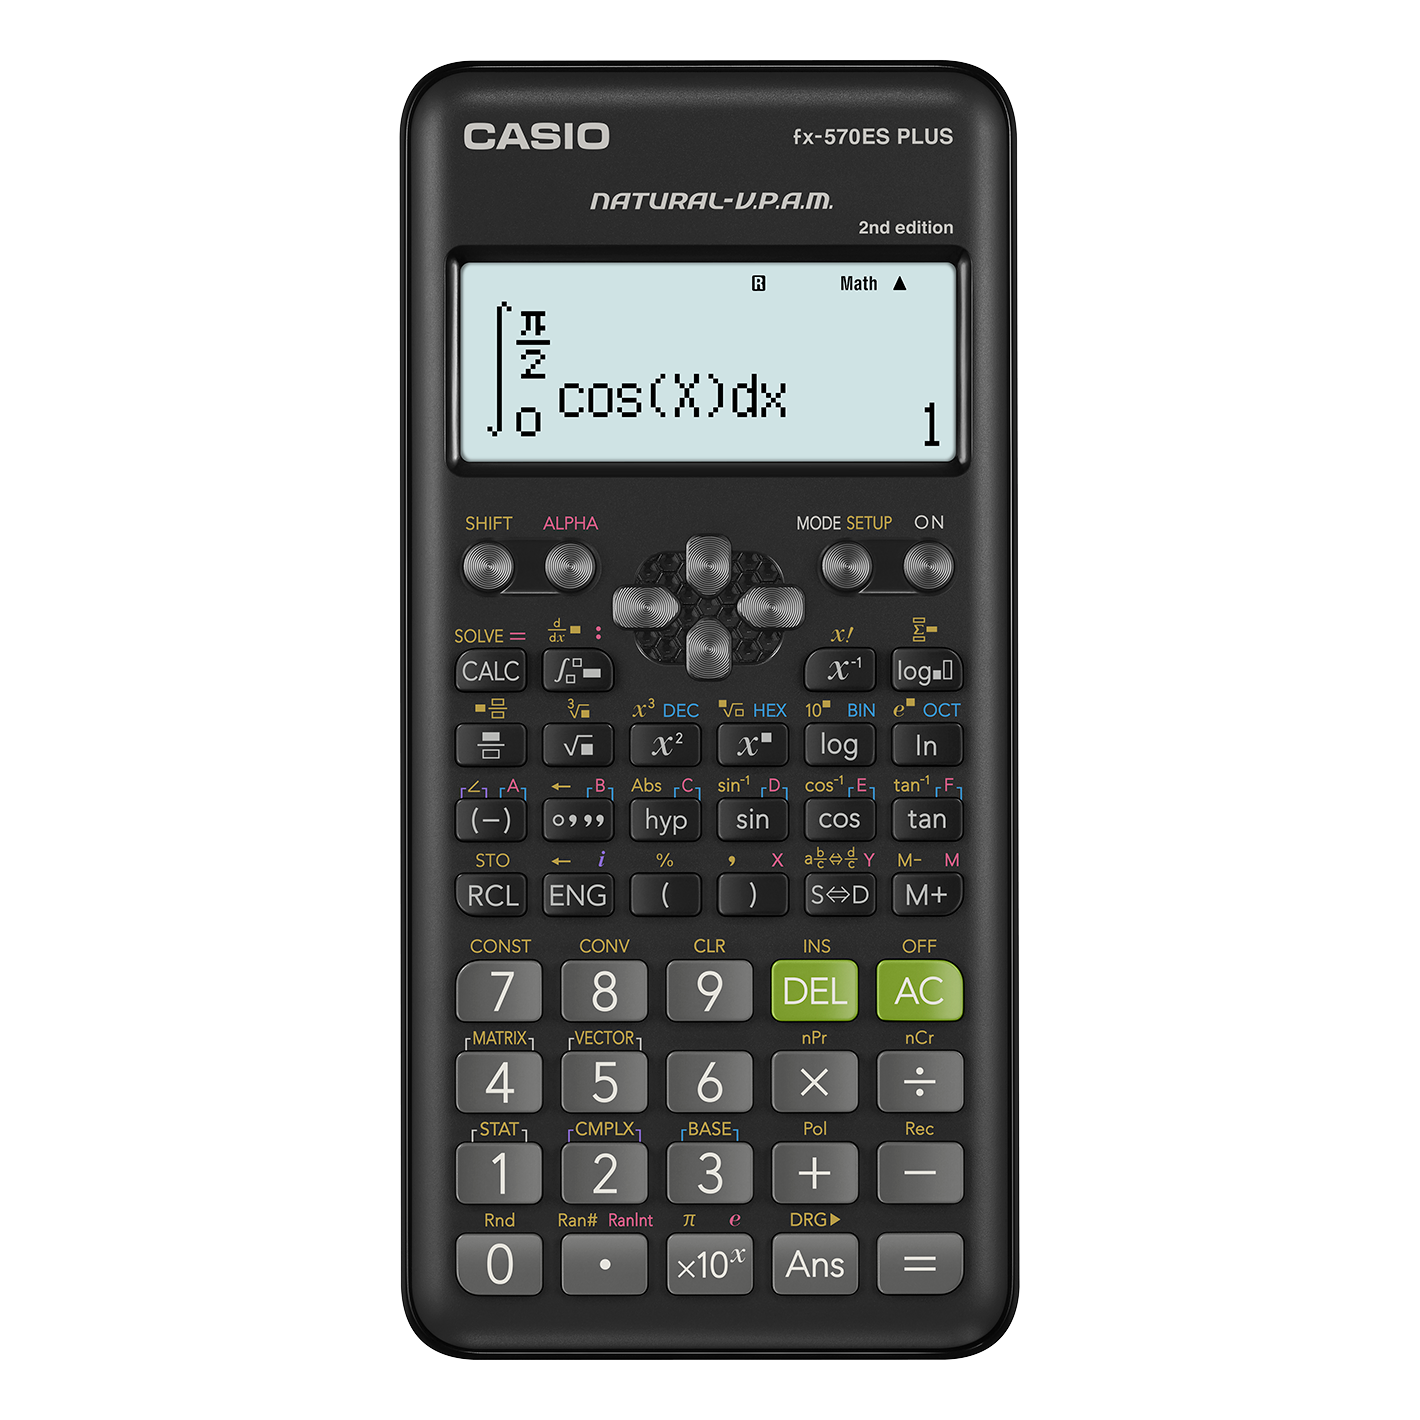 Casio fx-570es plus 2nd edition Calculator - Black